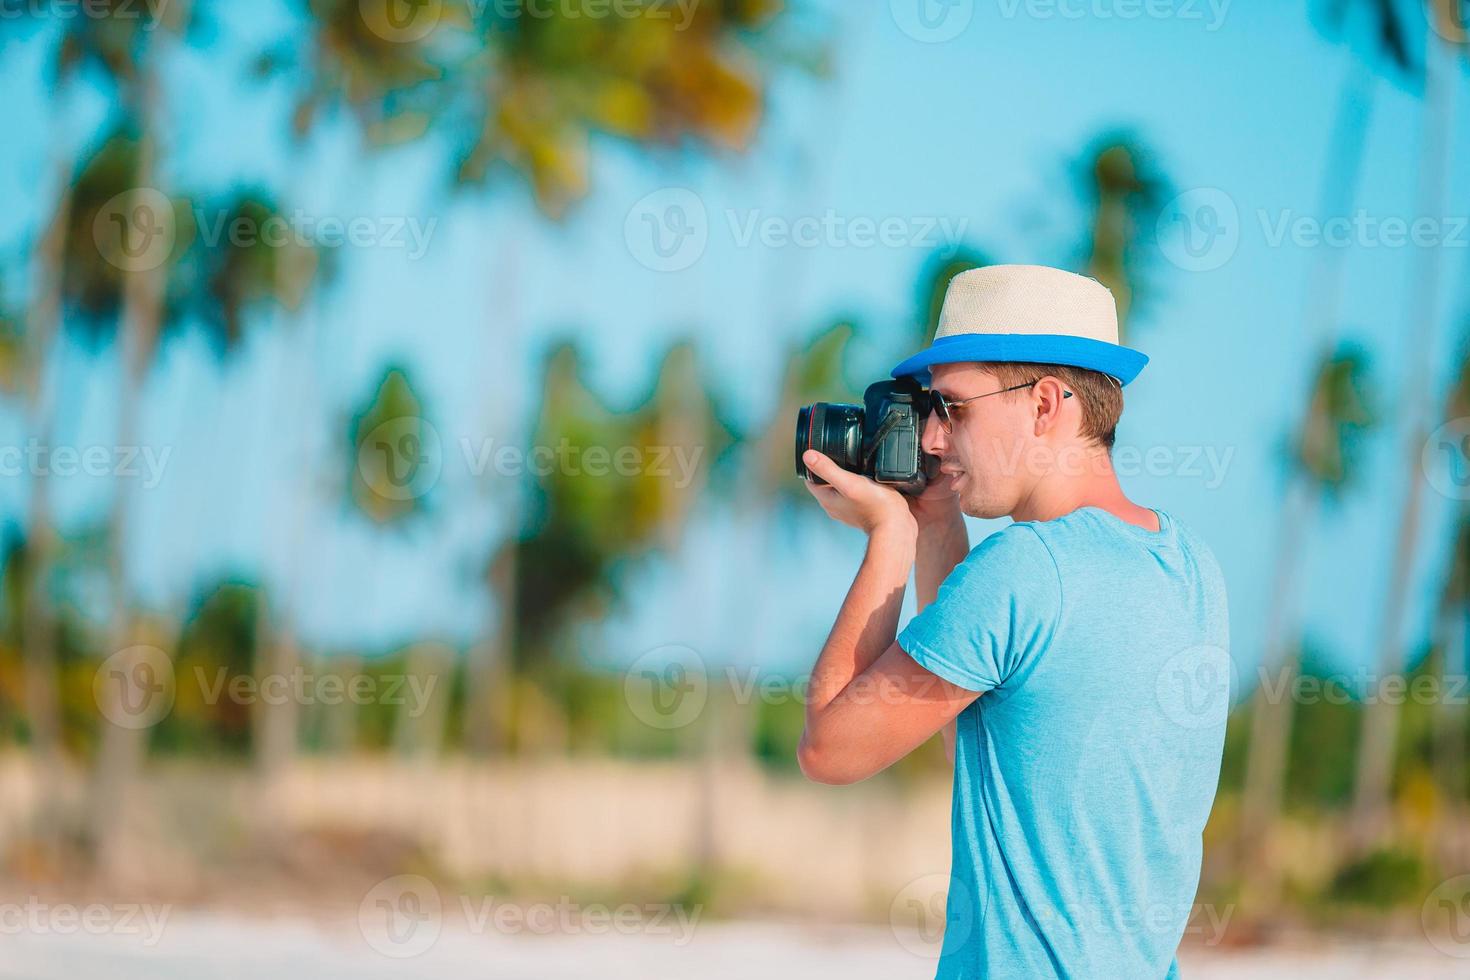 perfil de joven fotografiado hermoso paisaje marino en la playa de arena blanca foto